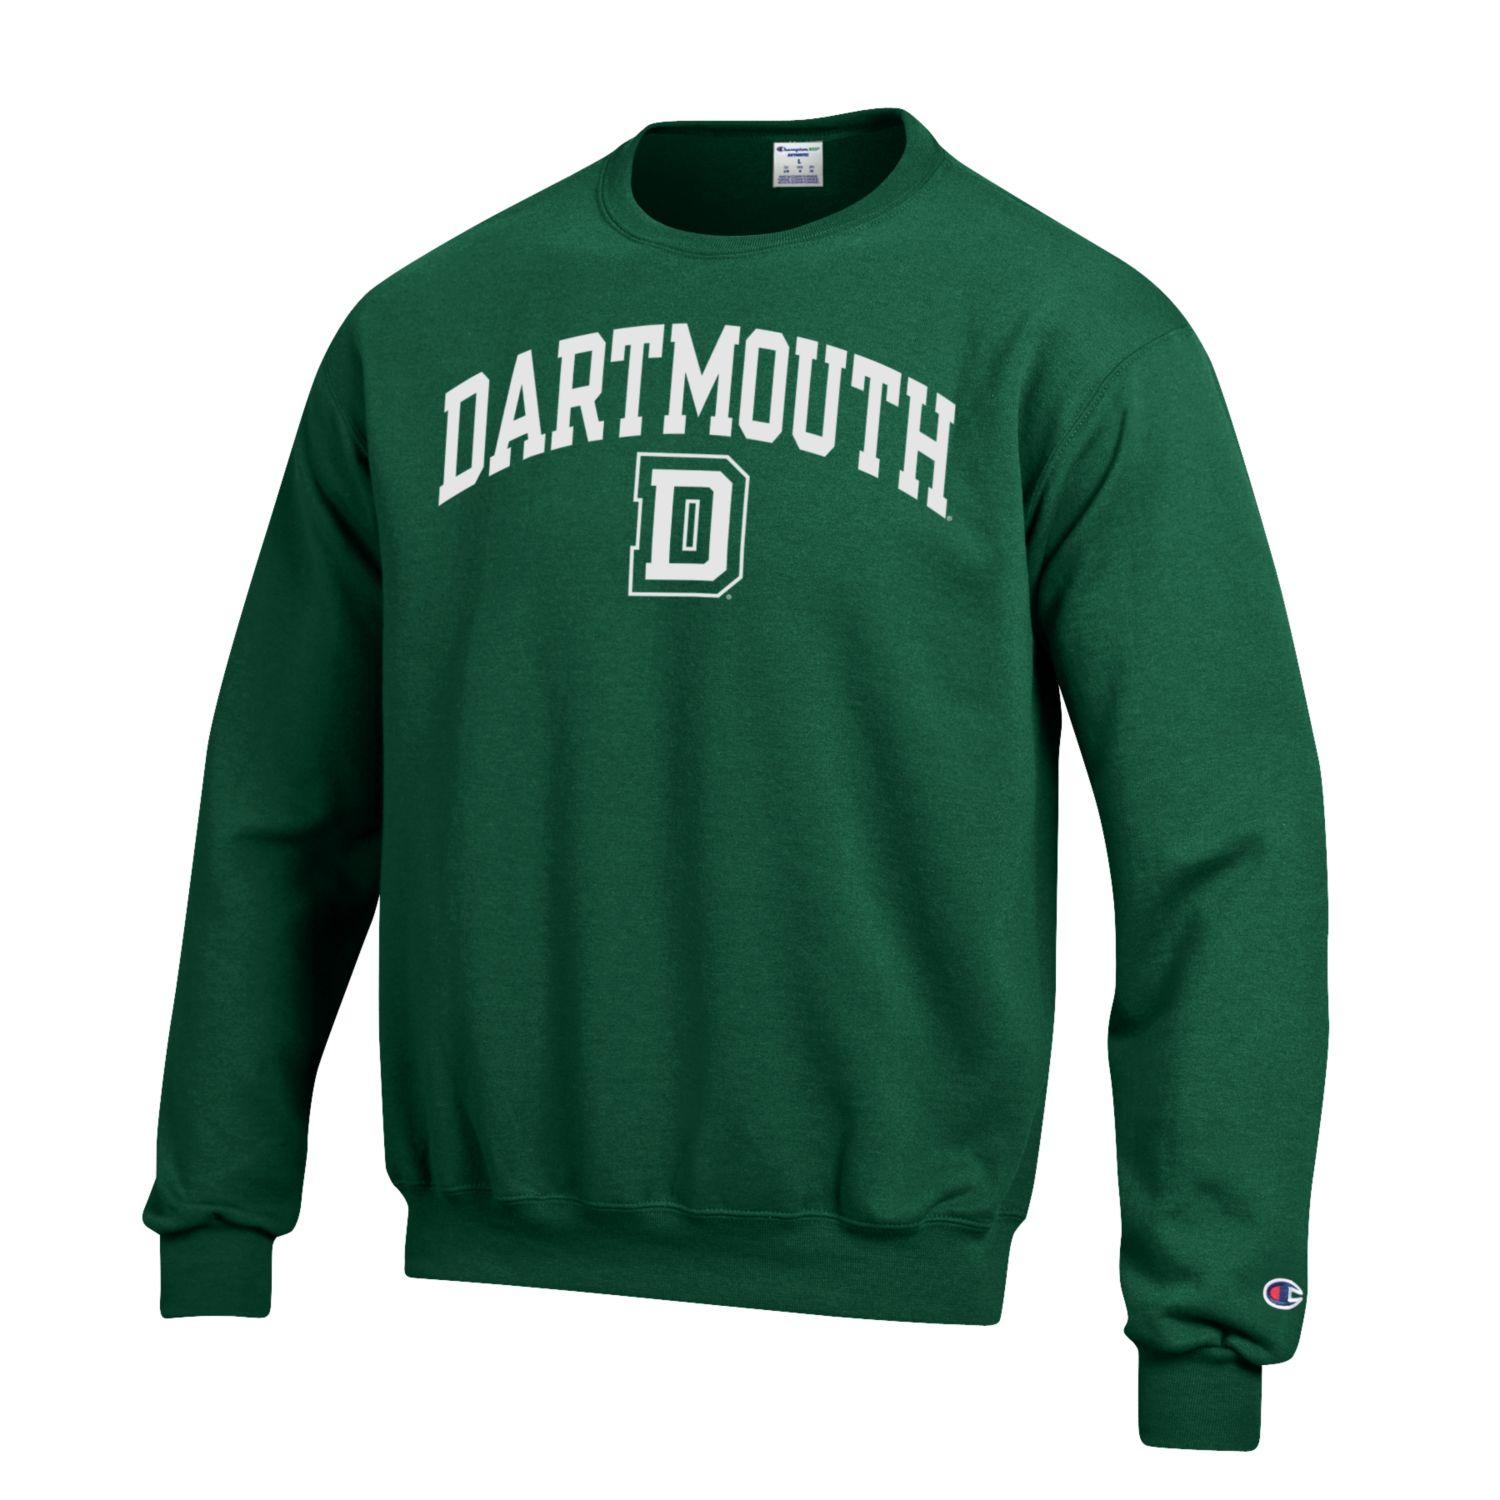 Som svar på Kunstig Arbitrage Dartmouth Big Green Champion Crew Neck Sweatshirt-Green – Shop College Wear